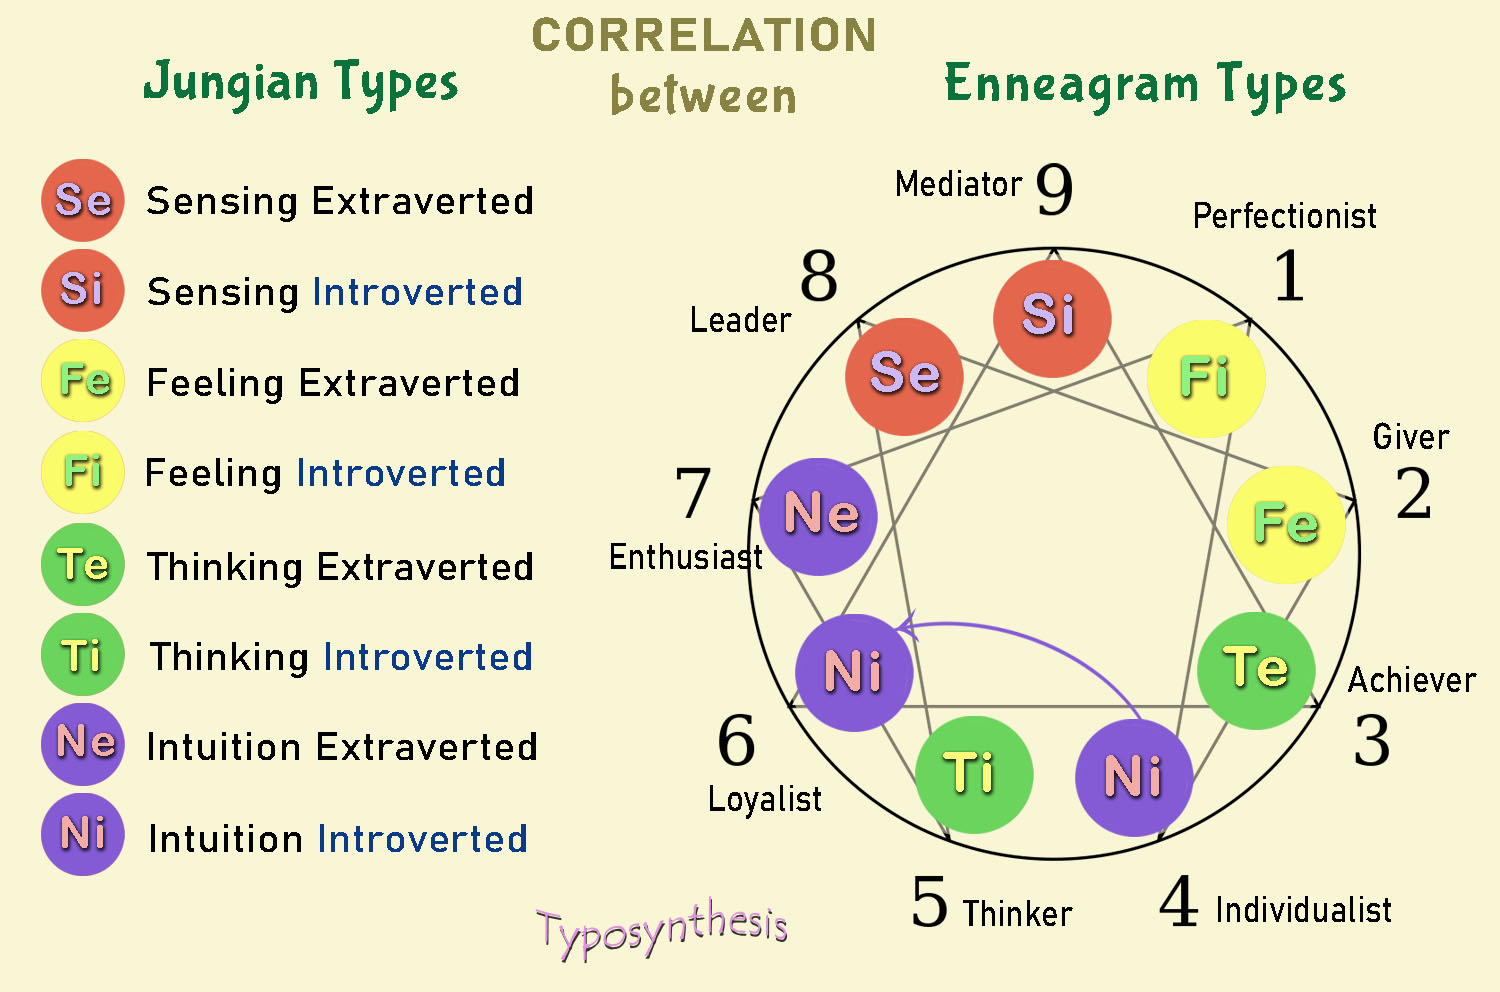 Enneagram and MBTI Correlation - Typology Wiki